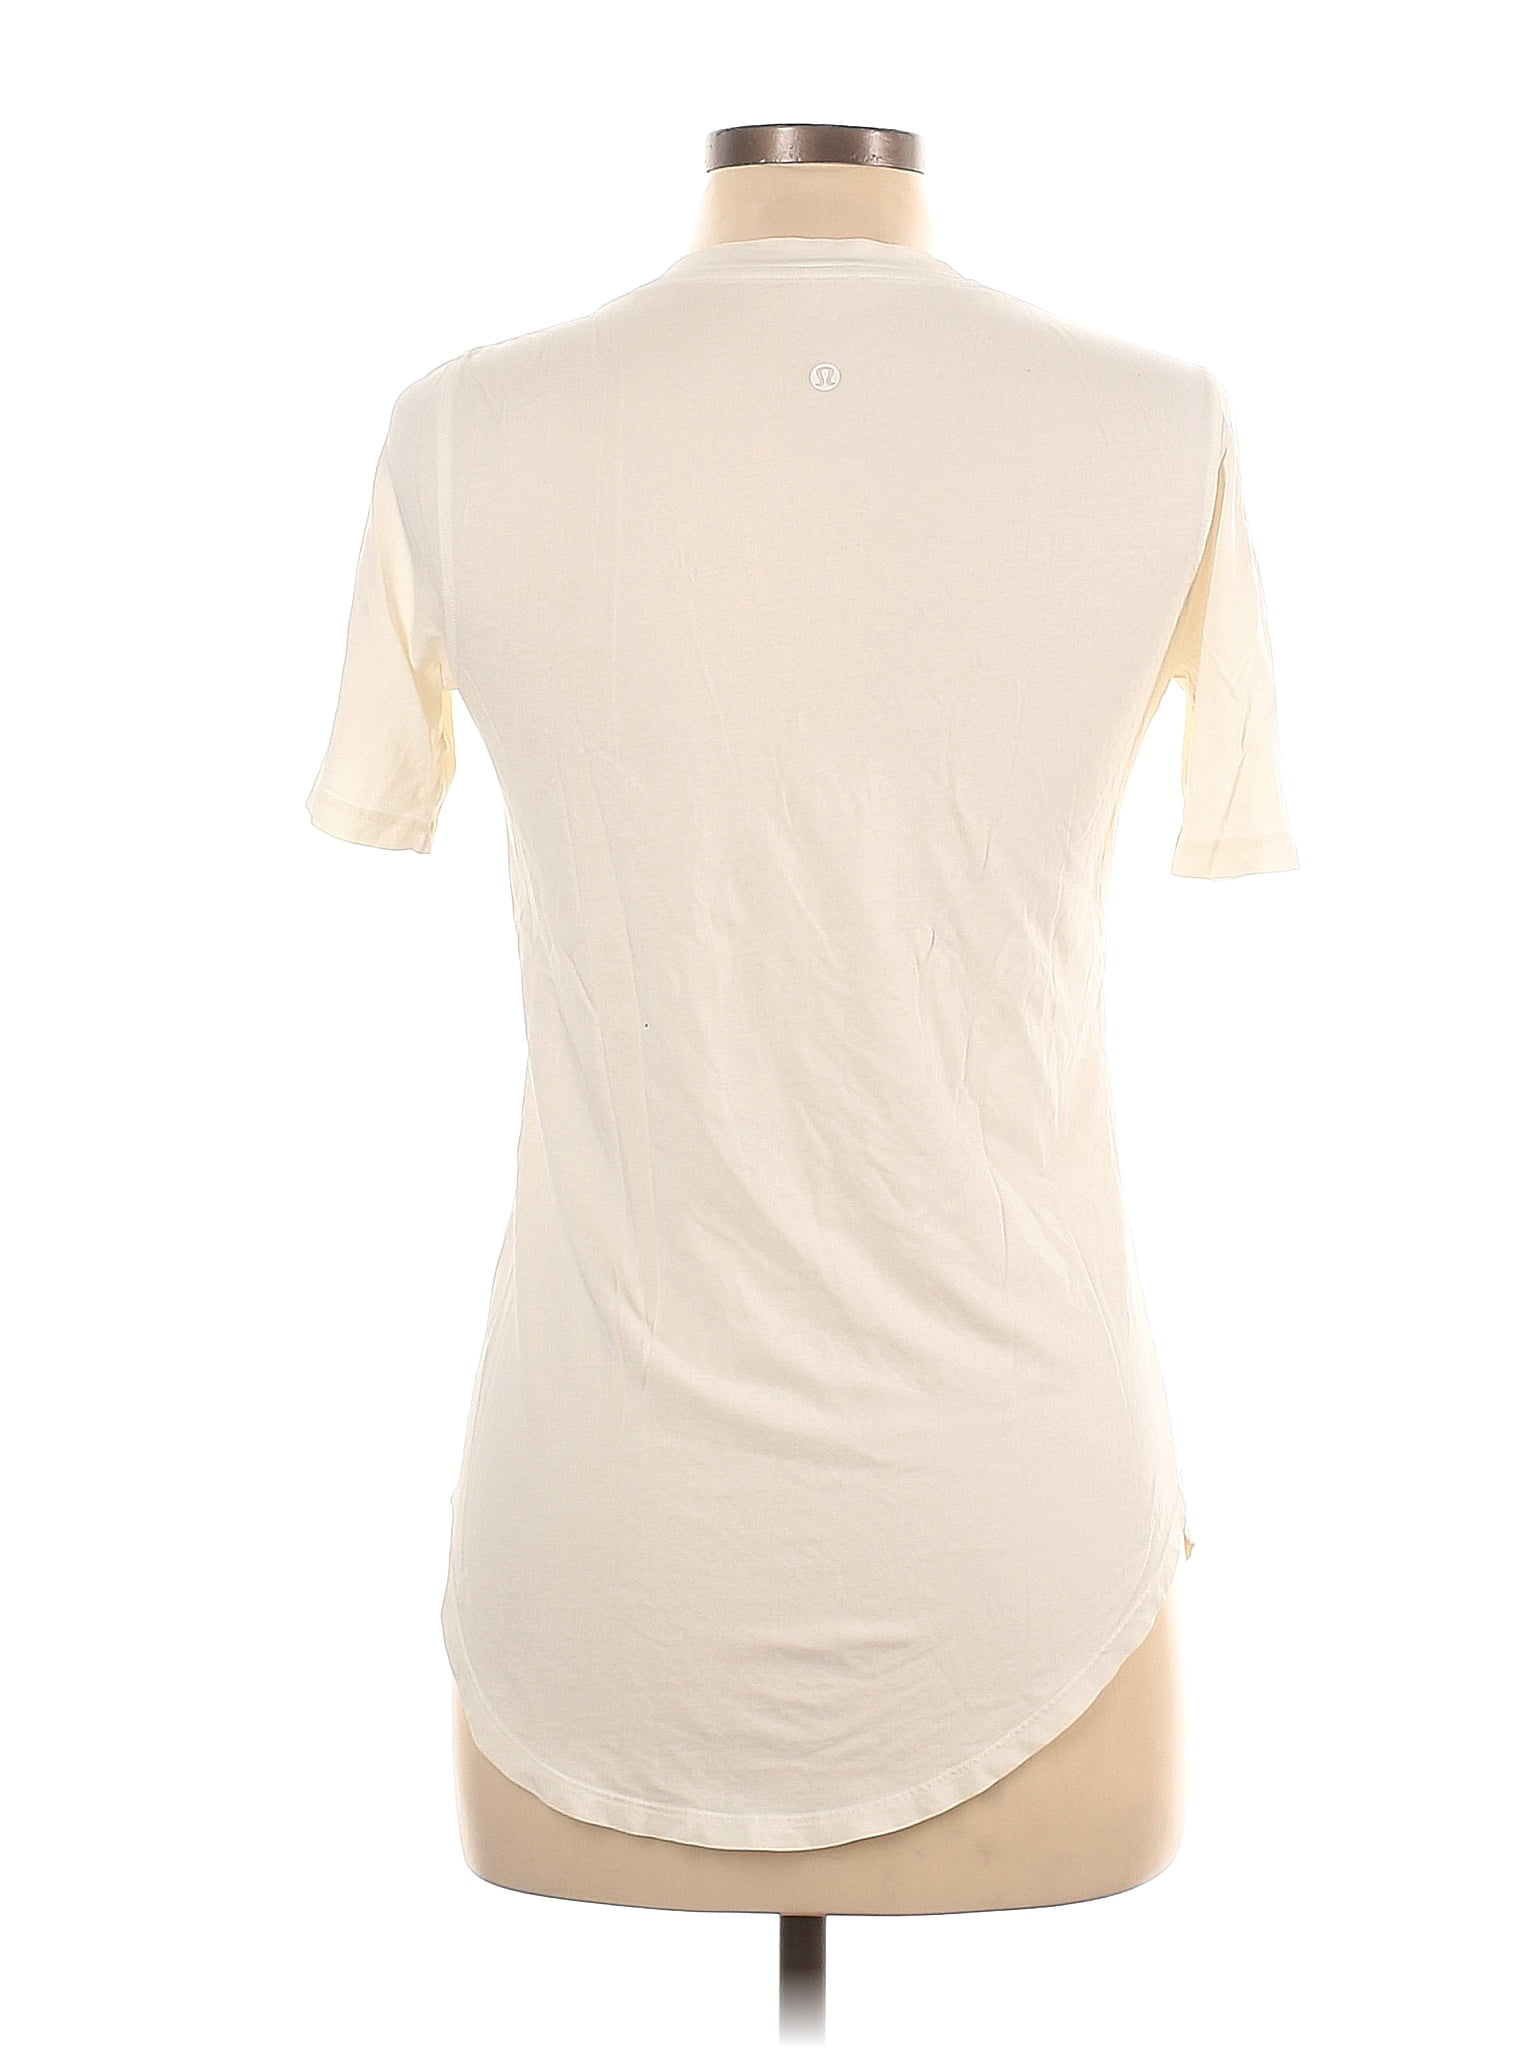 Lululemon Athletica Solid Ivory Active T-Shirt Size 10 - 43% off